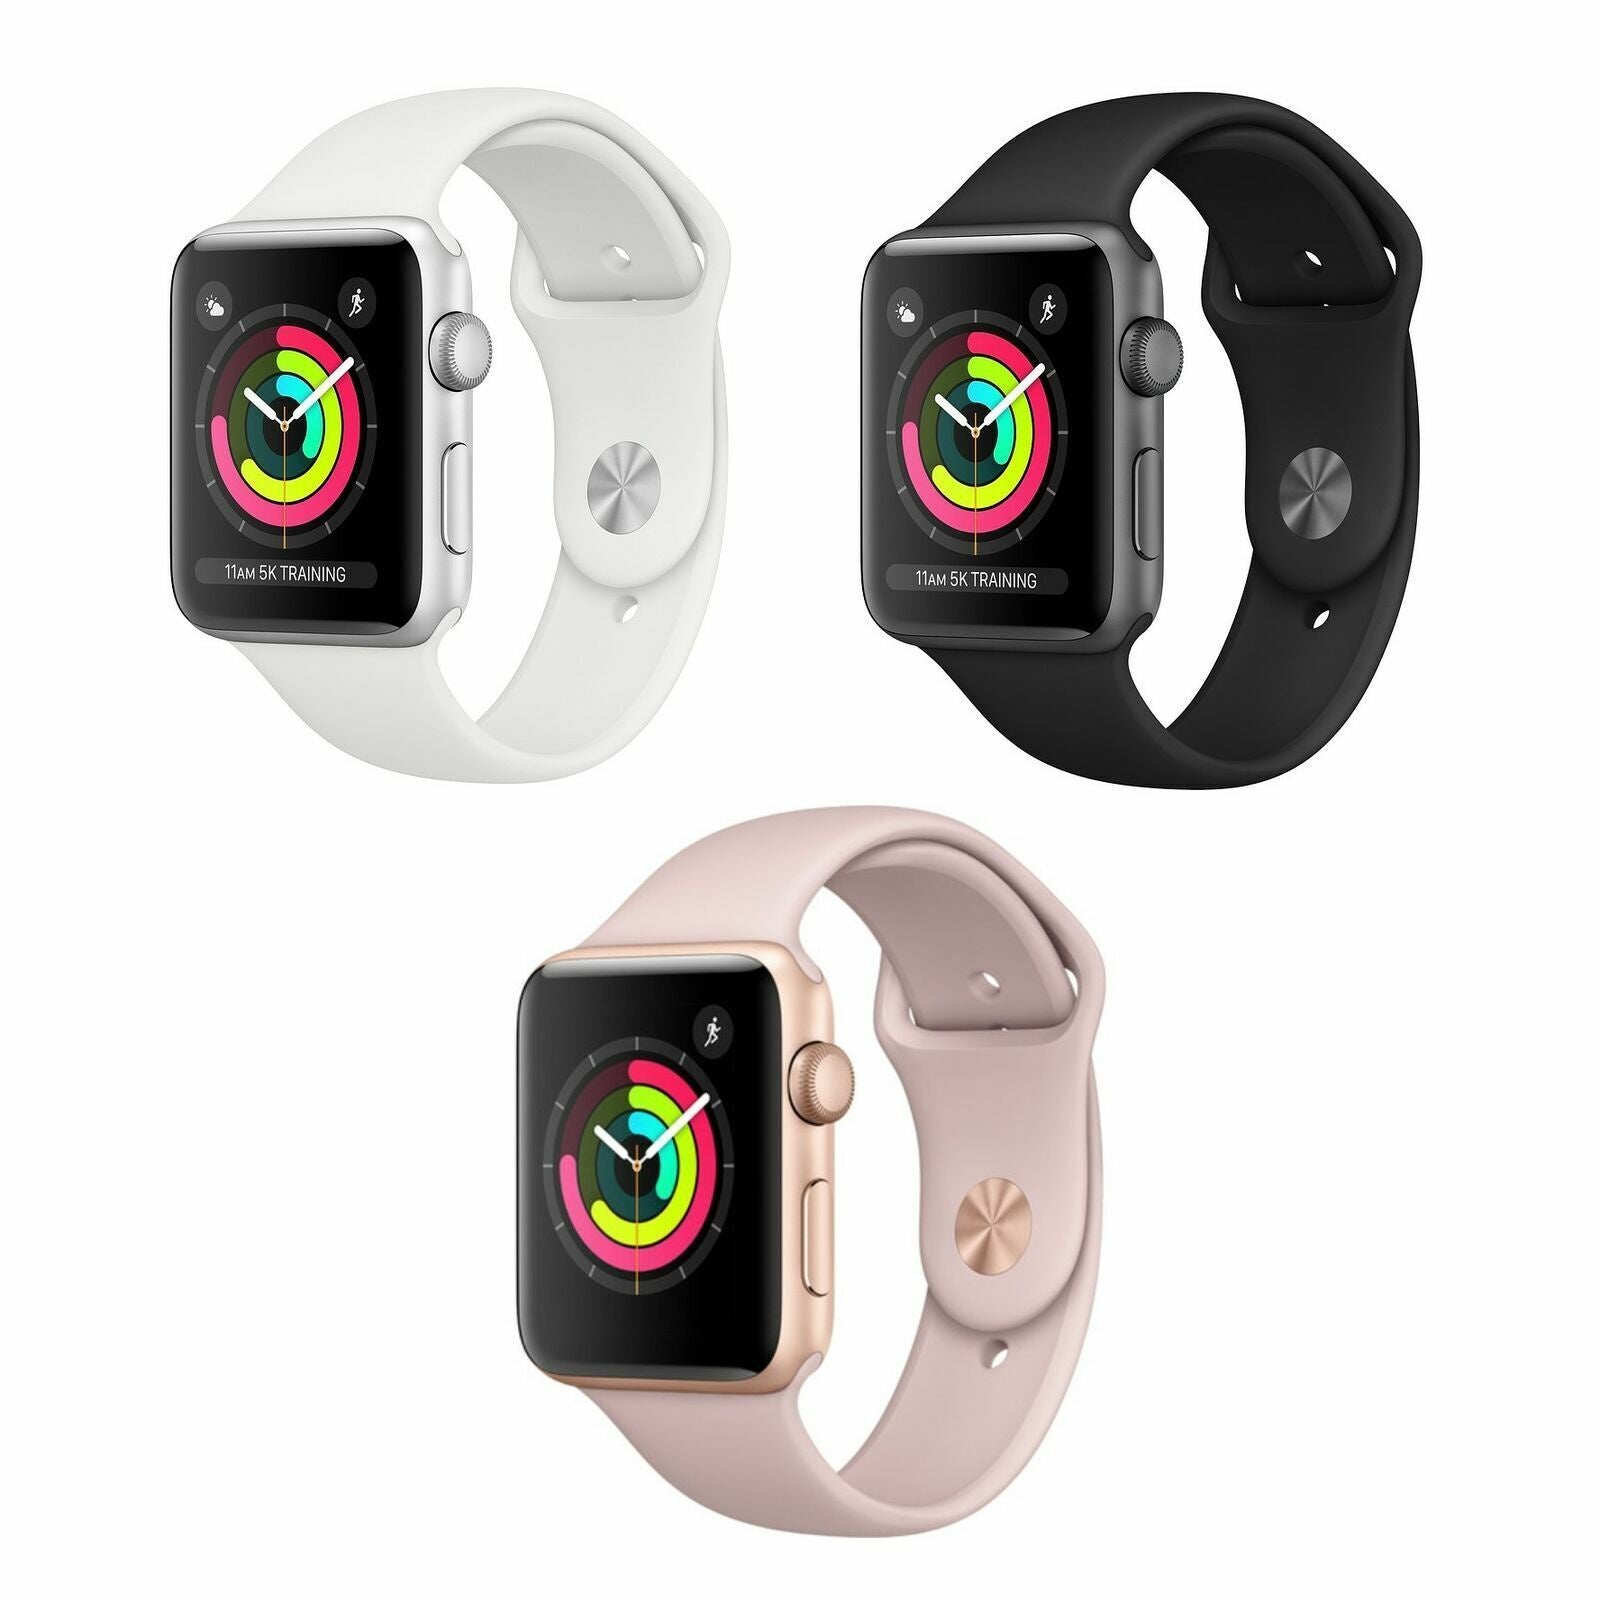 Apple Watch Series 3 | A1858 | 38MM | GPS